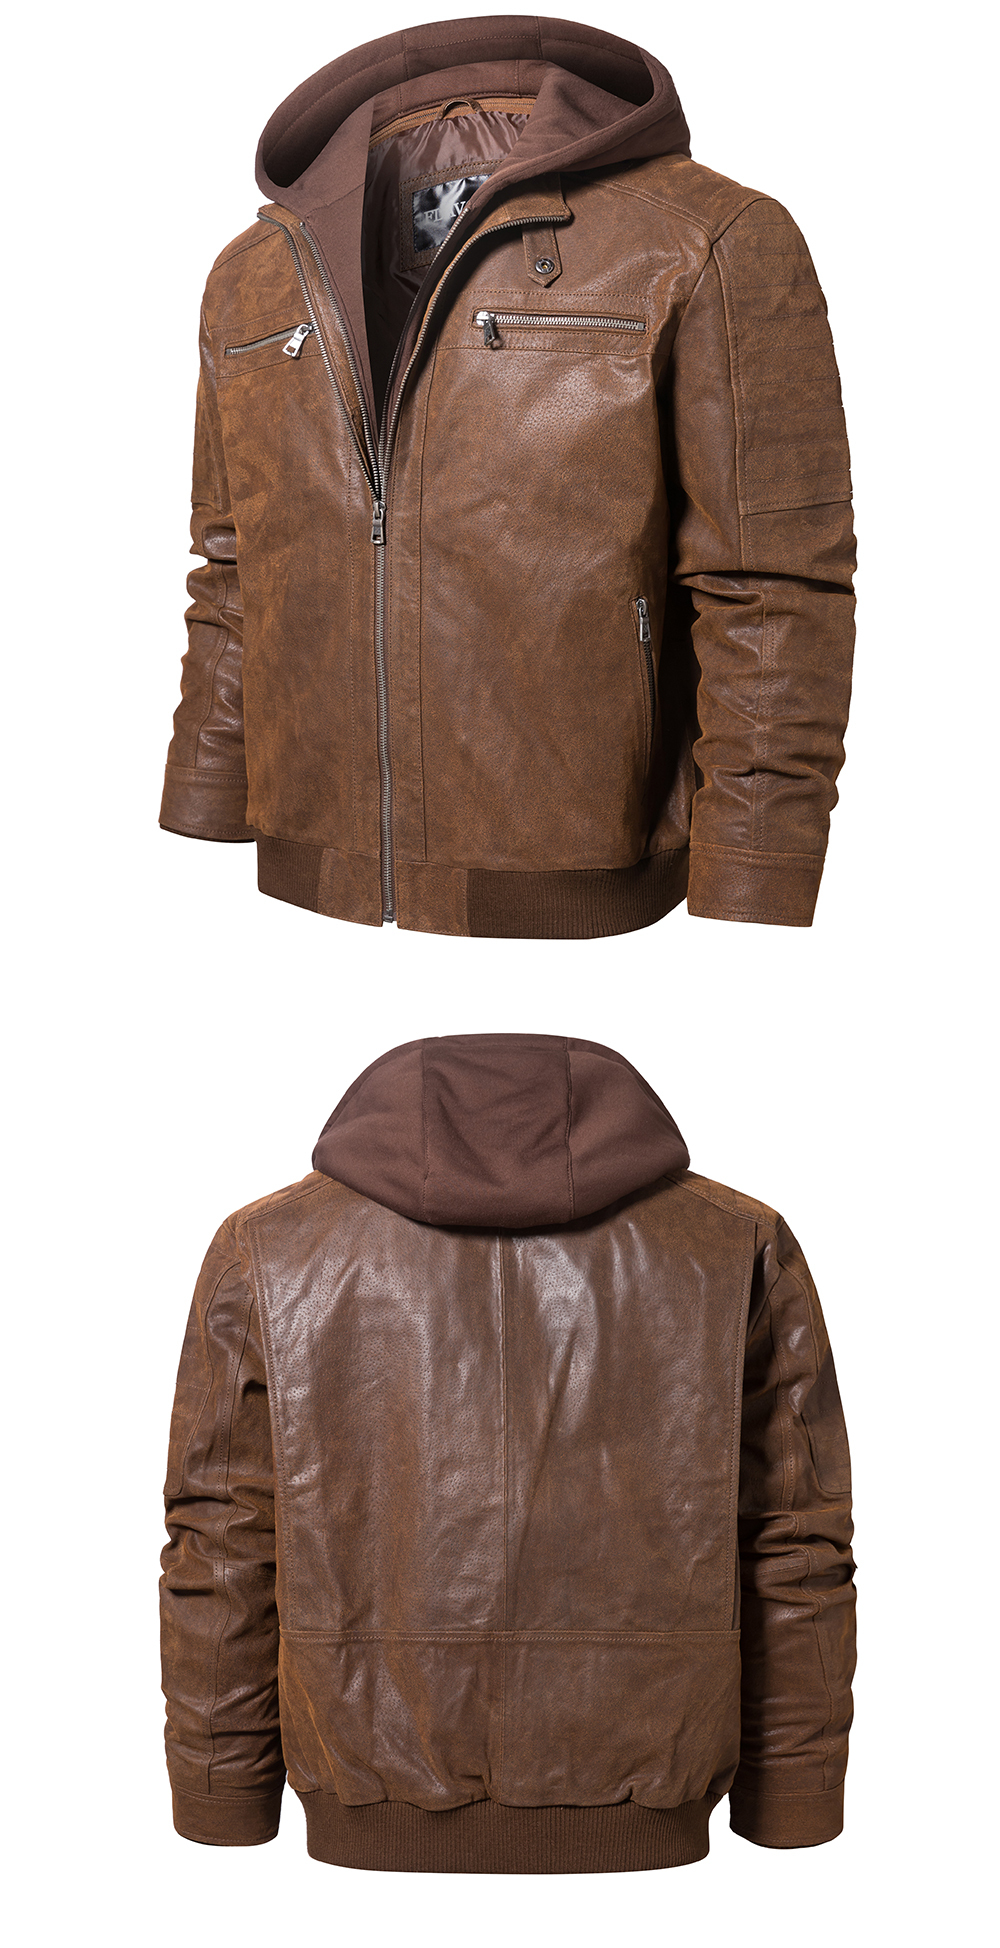 FLAVOR Men's Real Leather Jacket Pigskin Motorcycle Removable Hooded Jacket M2015-73 